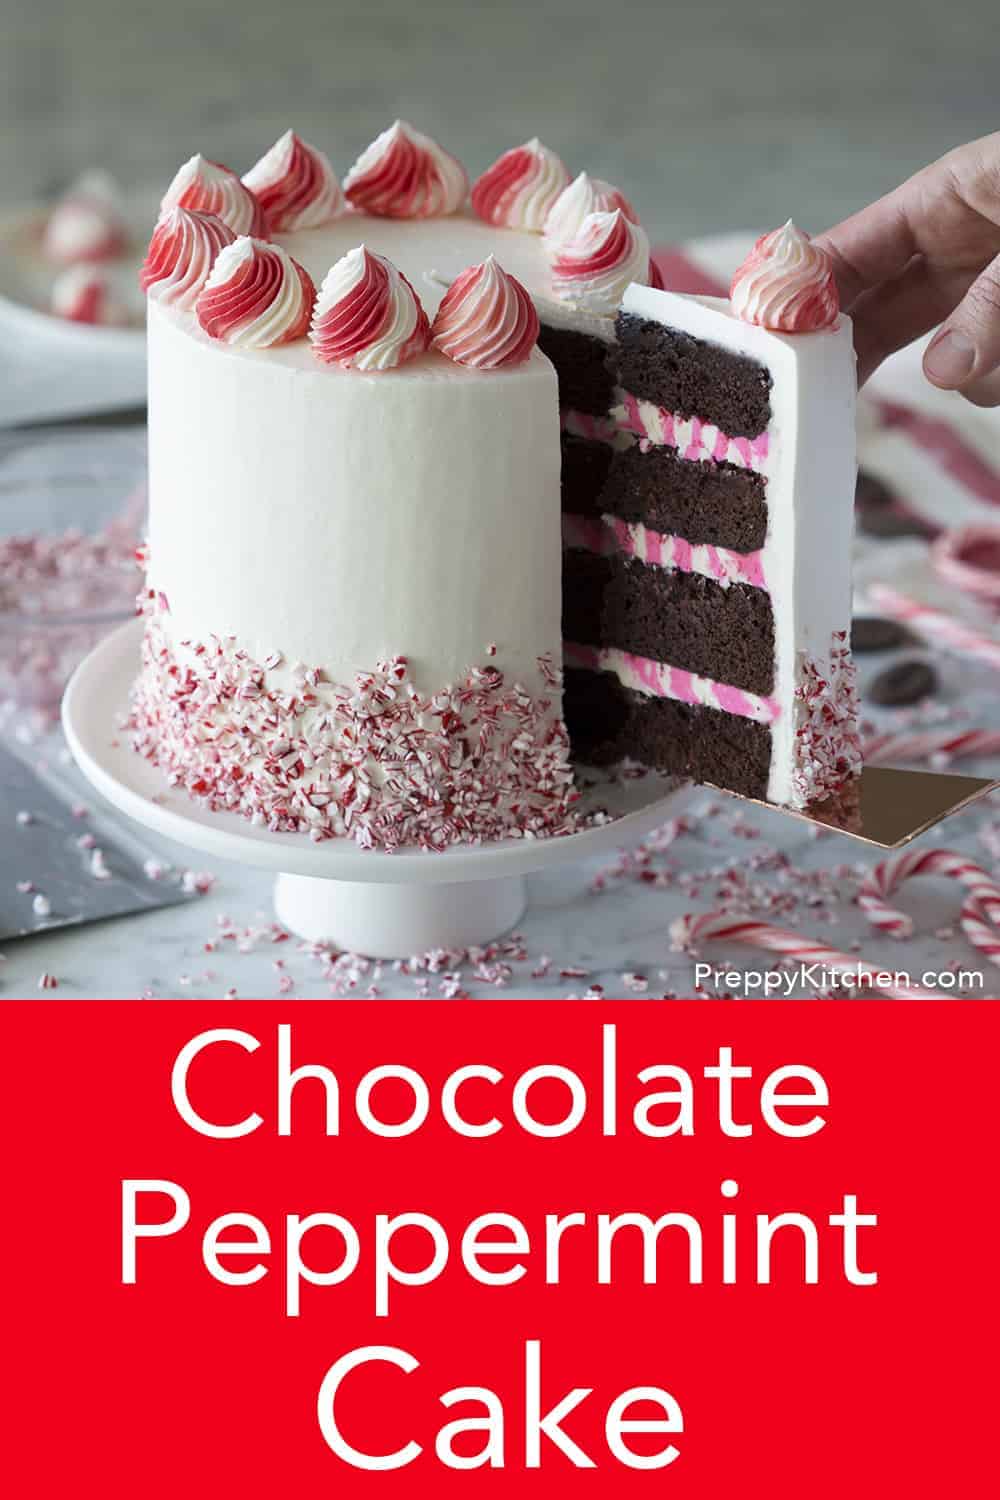 Chocolate Peppermint Cake - Preppy Kitchen